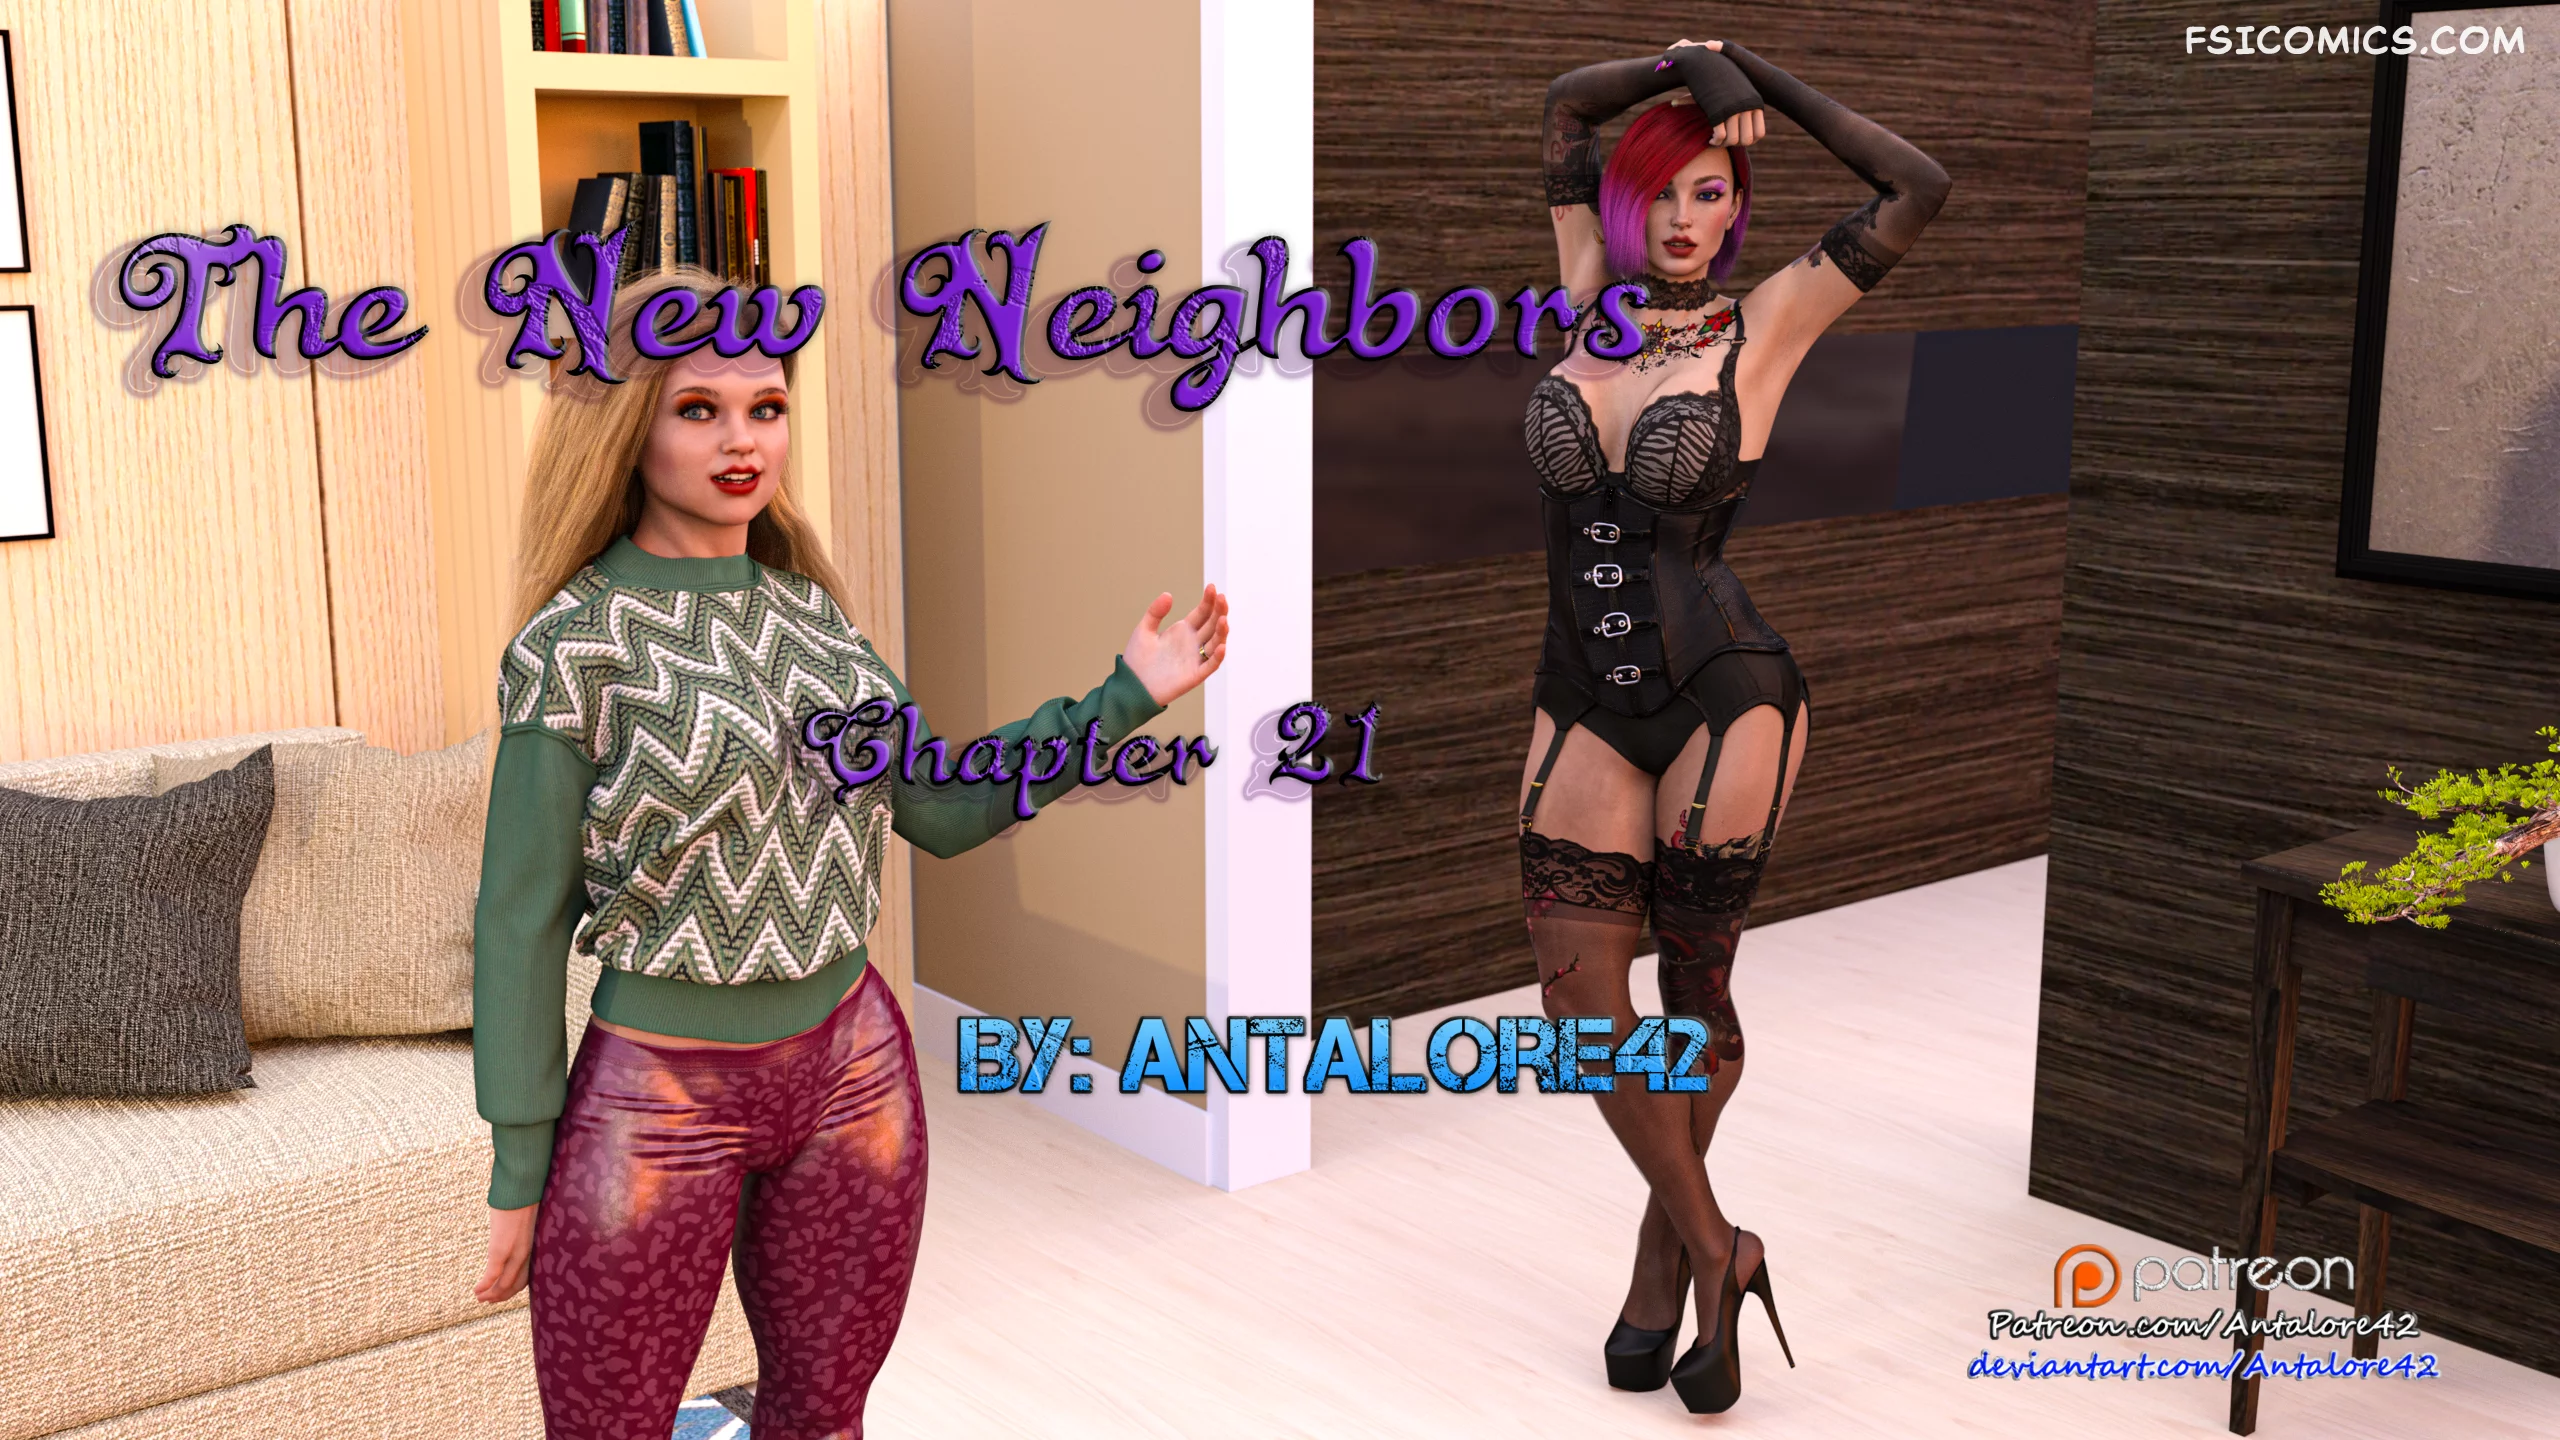 The New Neighbors Chapter 21 – Antalore42 - 15 - FSIComics